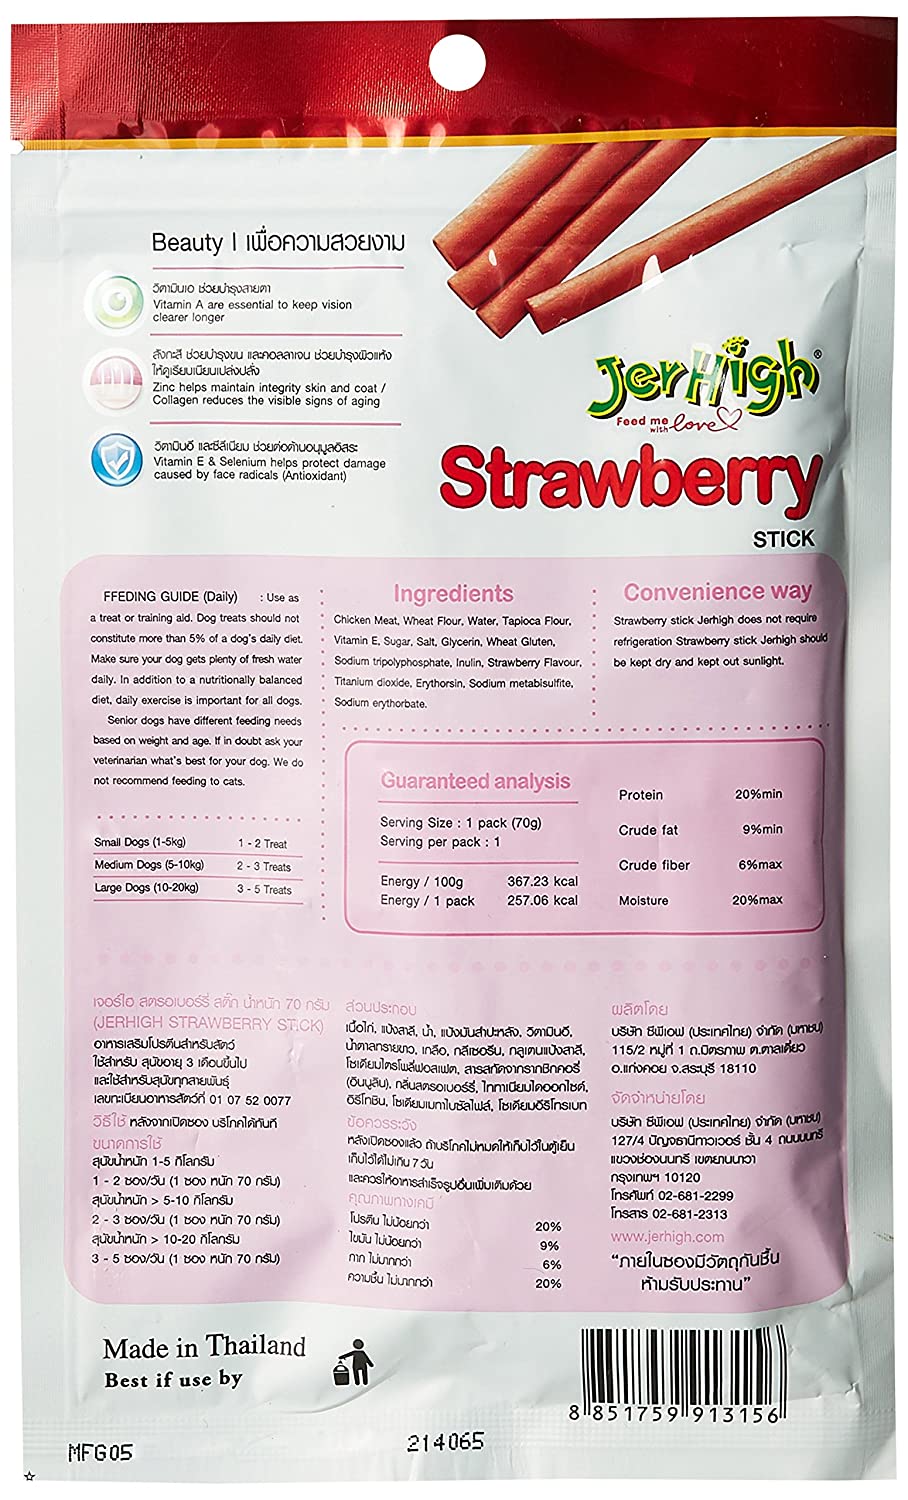 JerHigh Strawberry Flavored